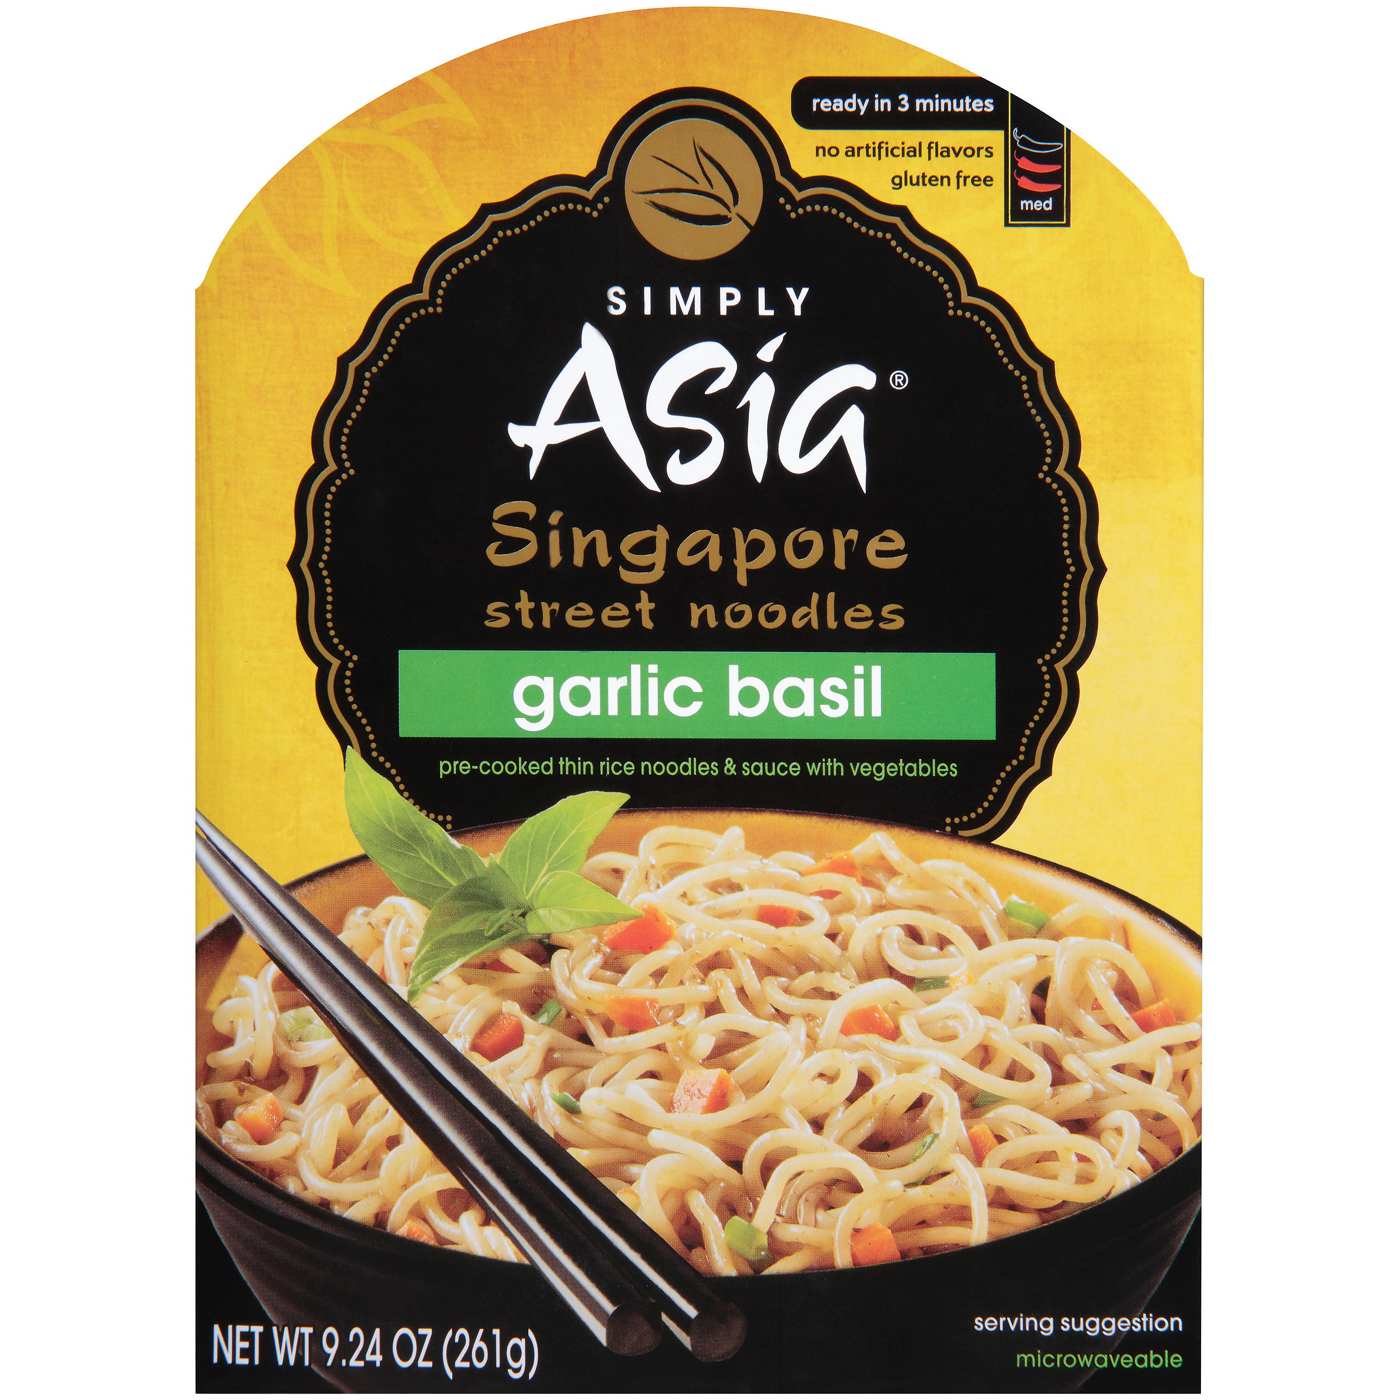 Simply Asia Garlic Basil Singapore Street Noodles; image 1 of 9